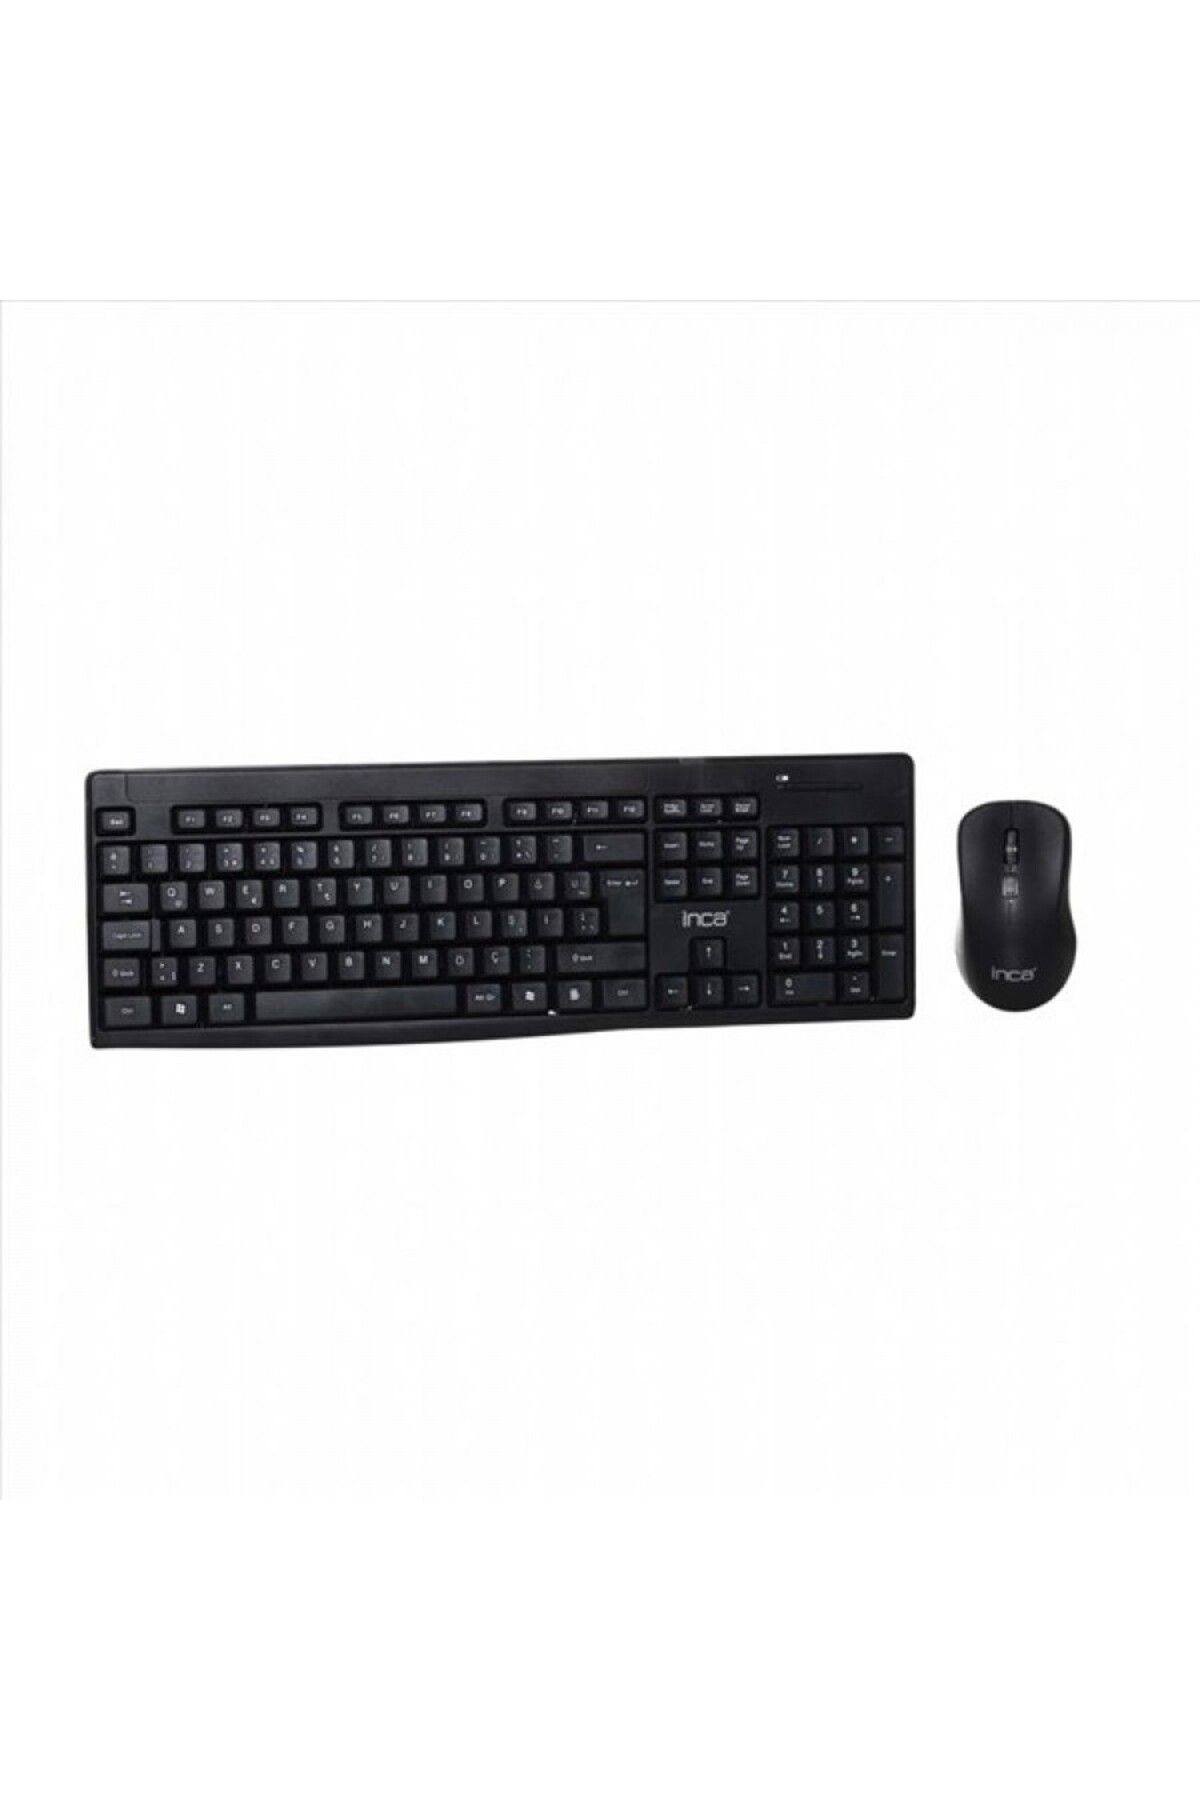 Inca IWS-539T Q Türkçe Kablosuz Multimedya Siyah Klavye+ Mouse